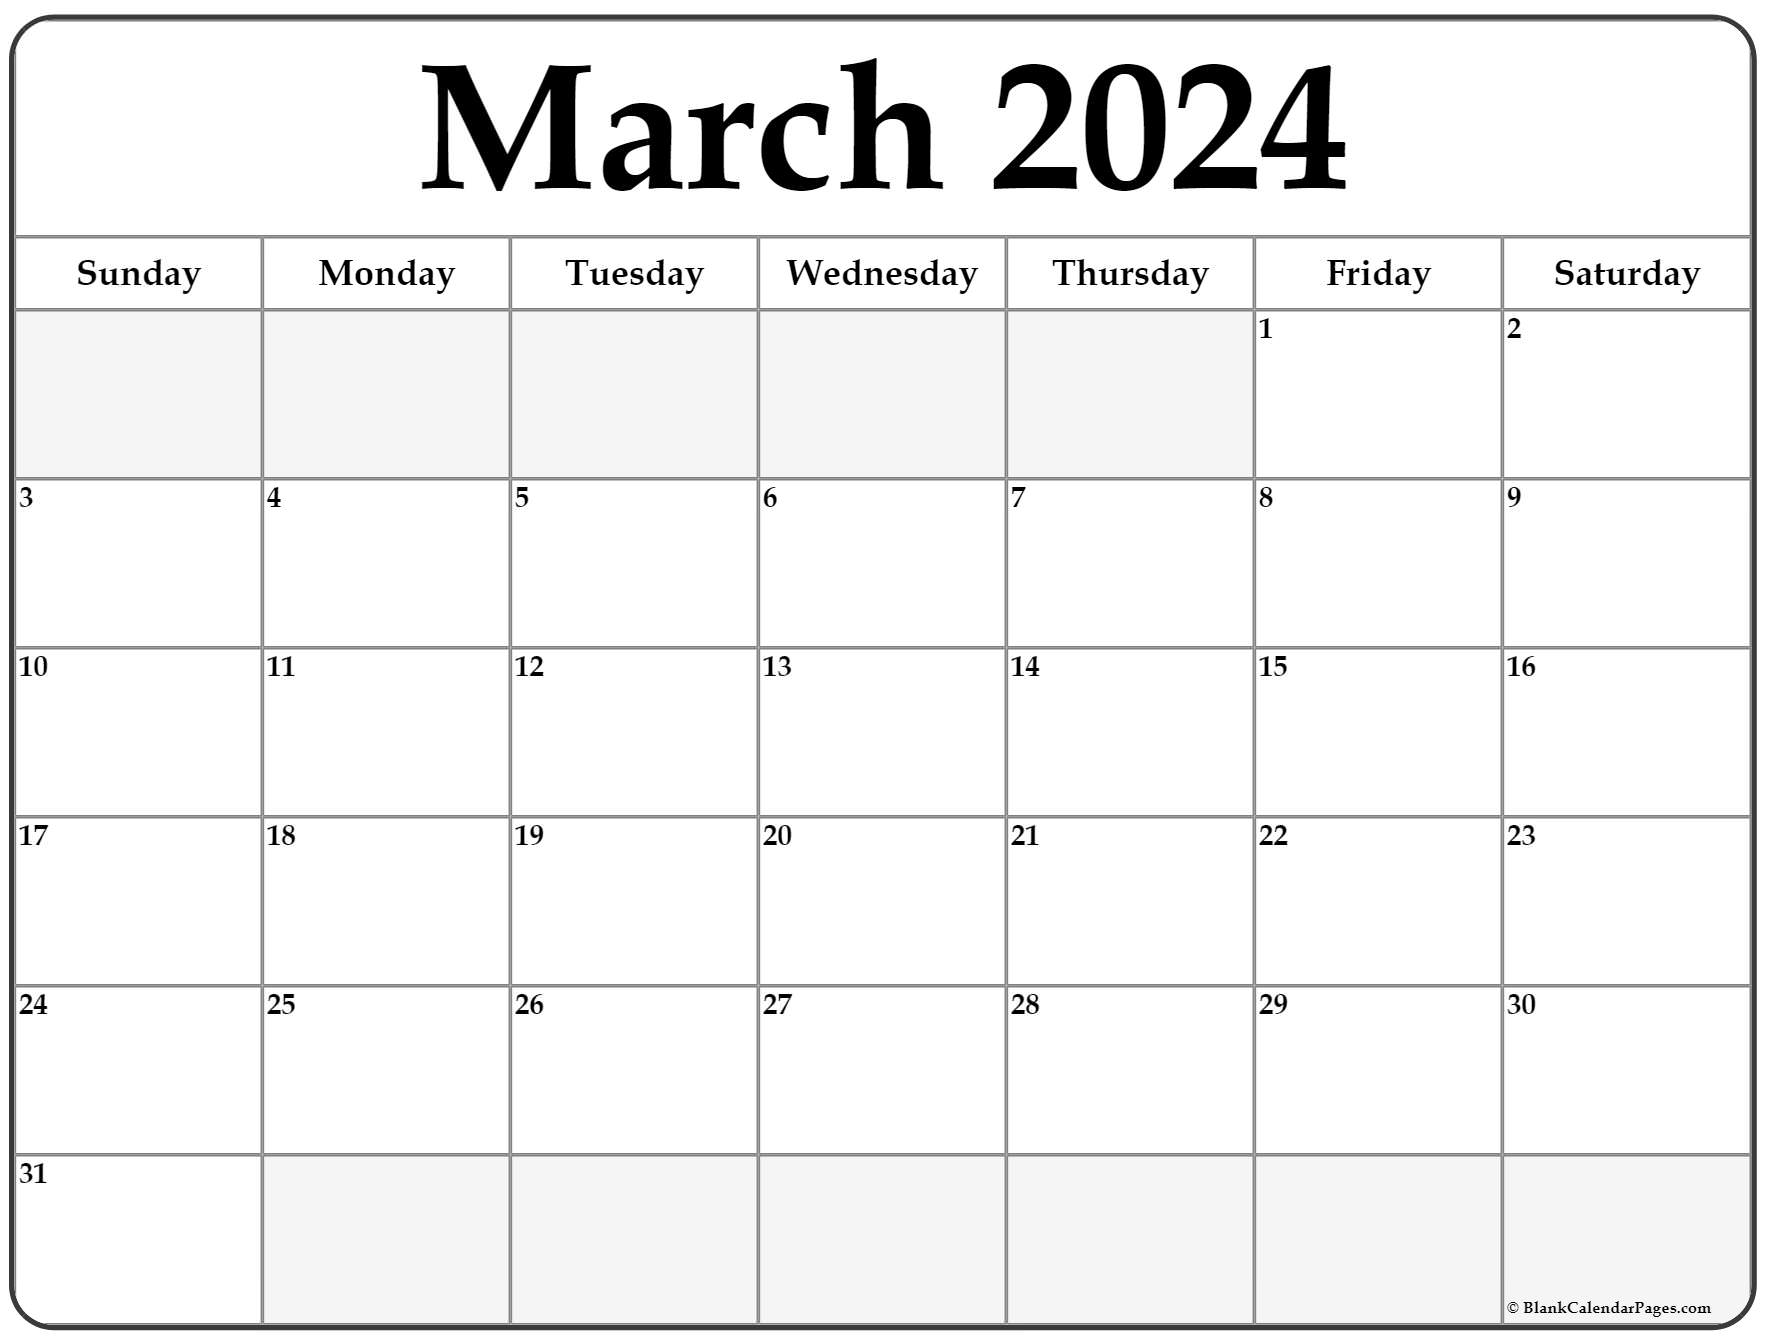 Monthly Calendar March 2022 March 2022 Calendar | Free Printable Calendar Templates